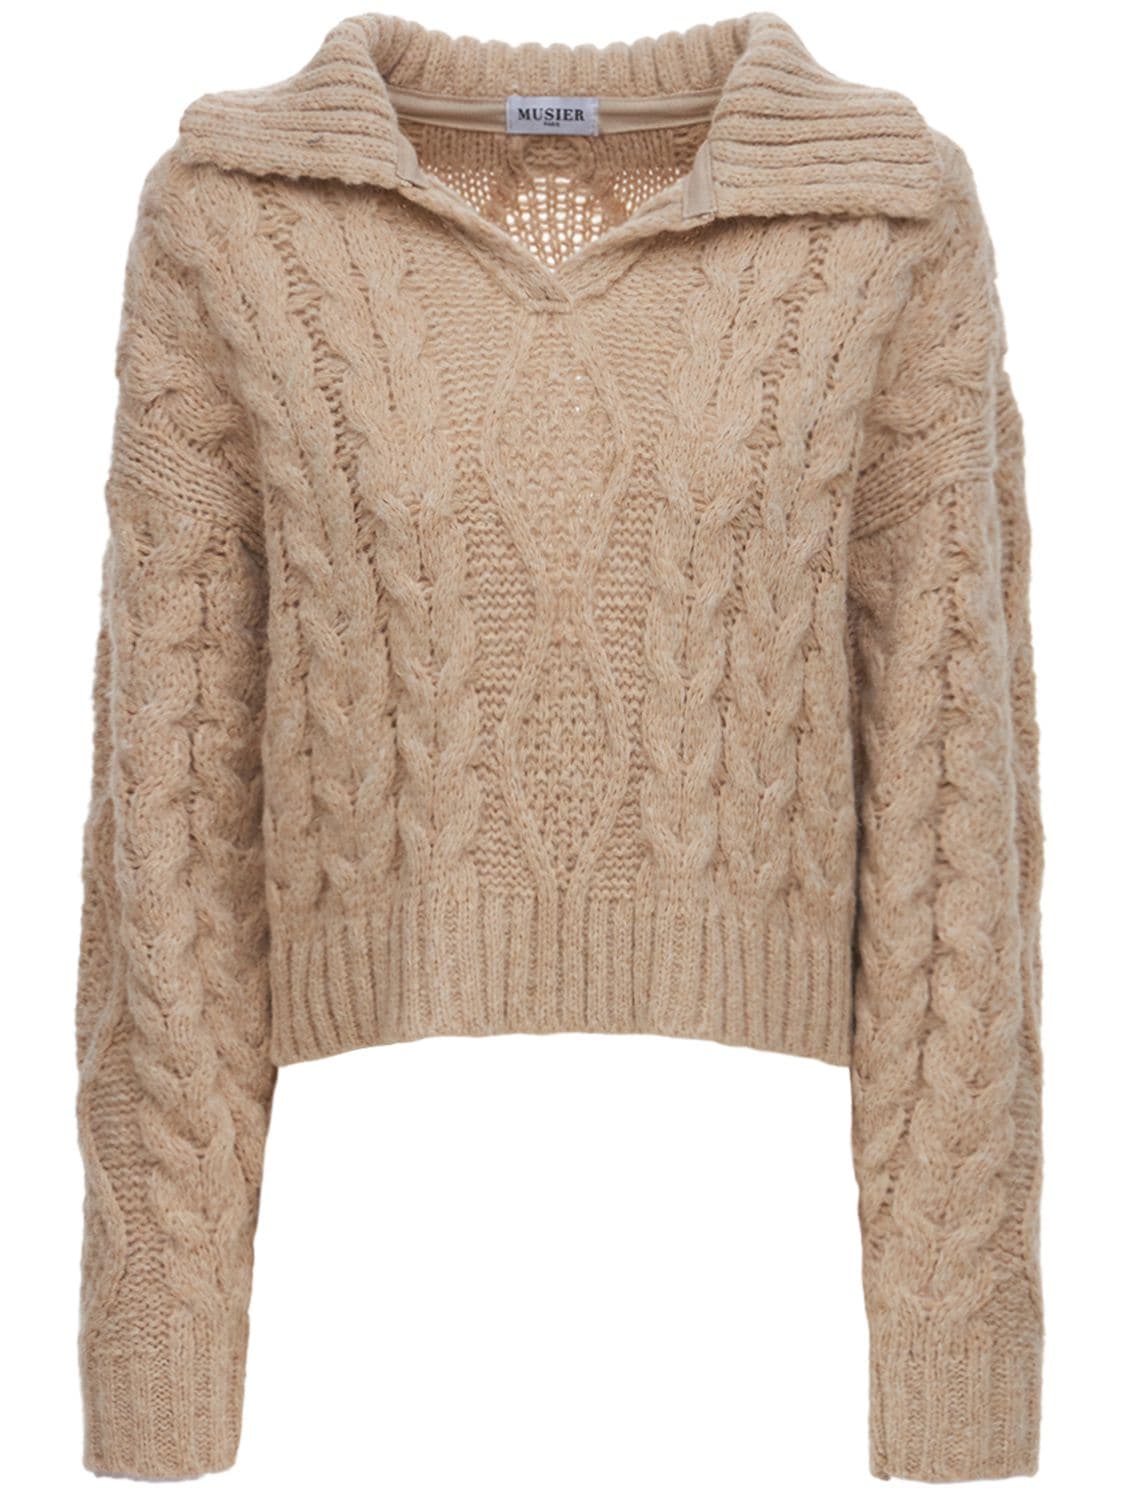 MUSIER PARIS Tora Cropped Cotton Blend Sweater